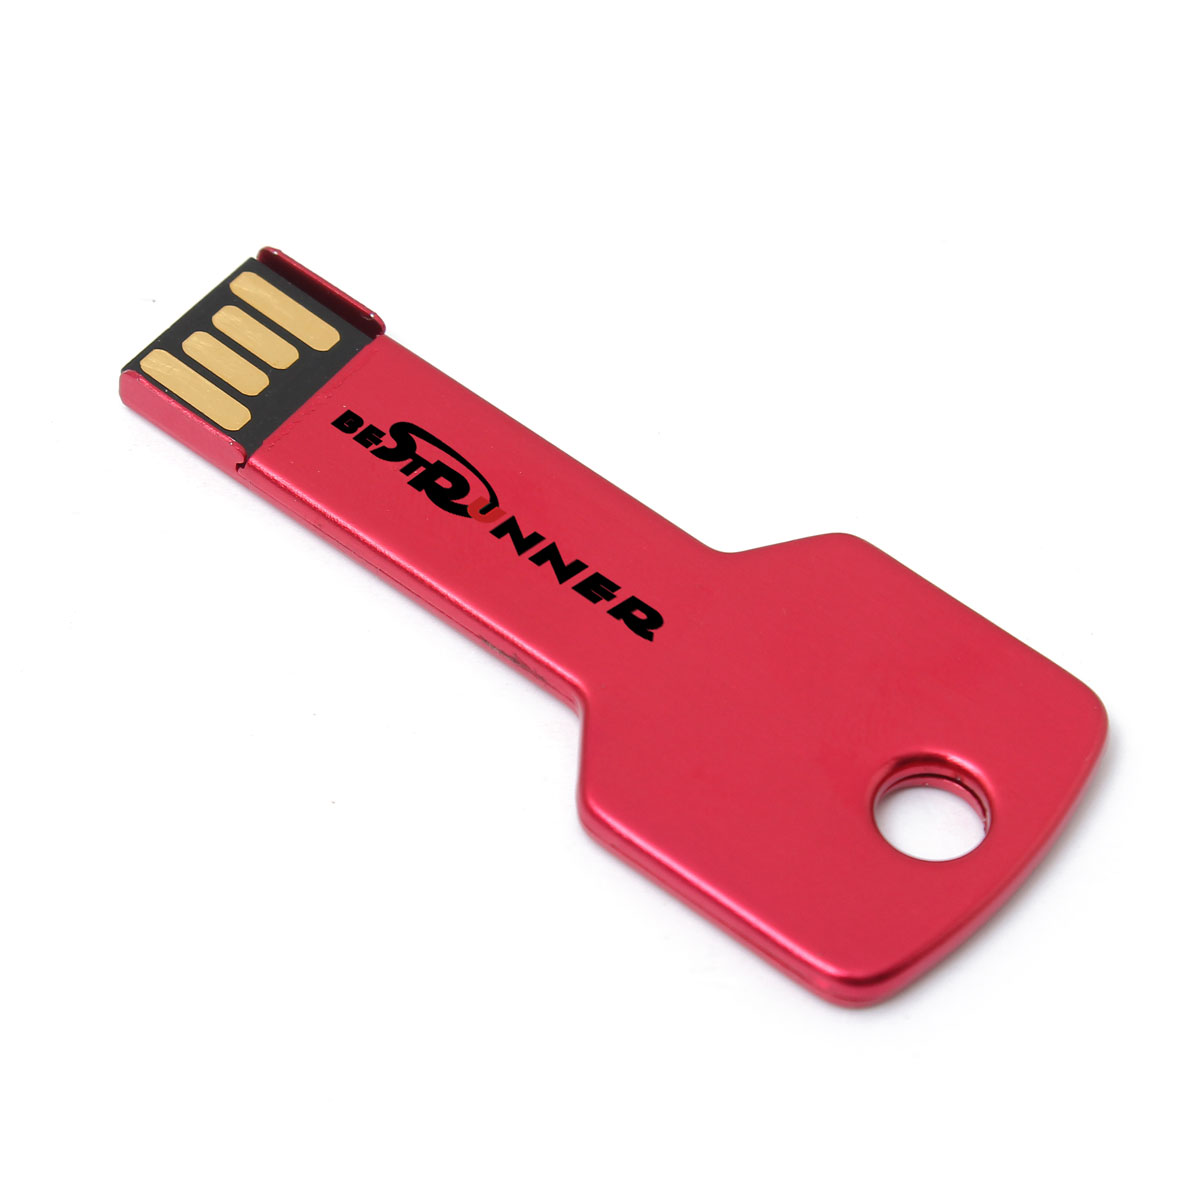 Bestrunner 2GB USB Metal Key Drive Flash Memory Drive Thumb Design 13